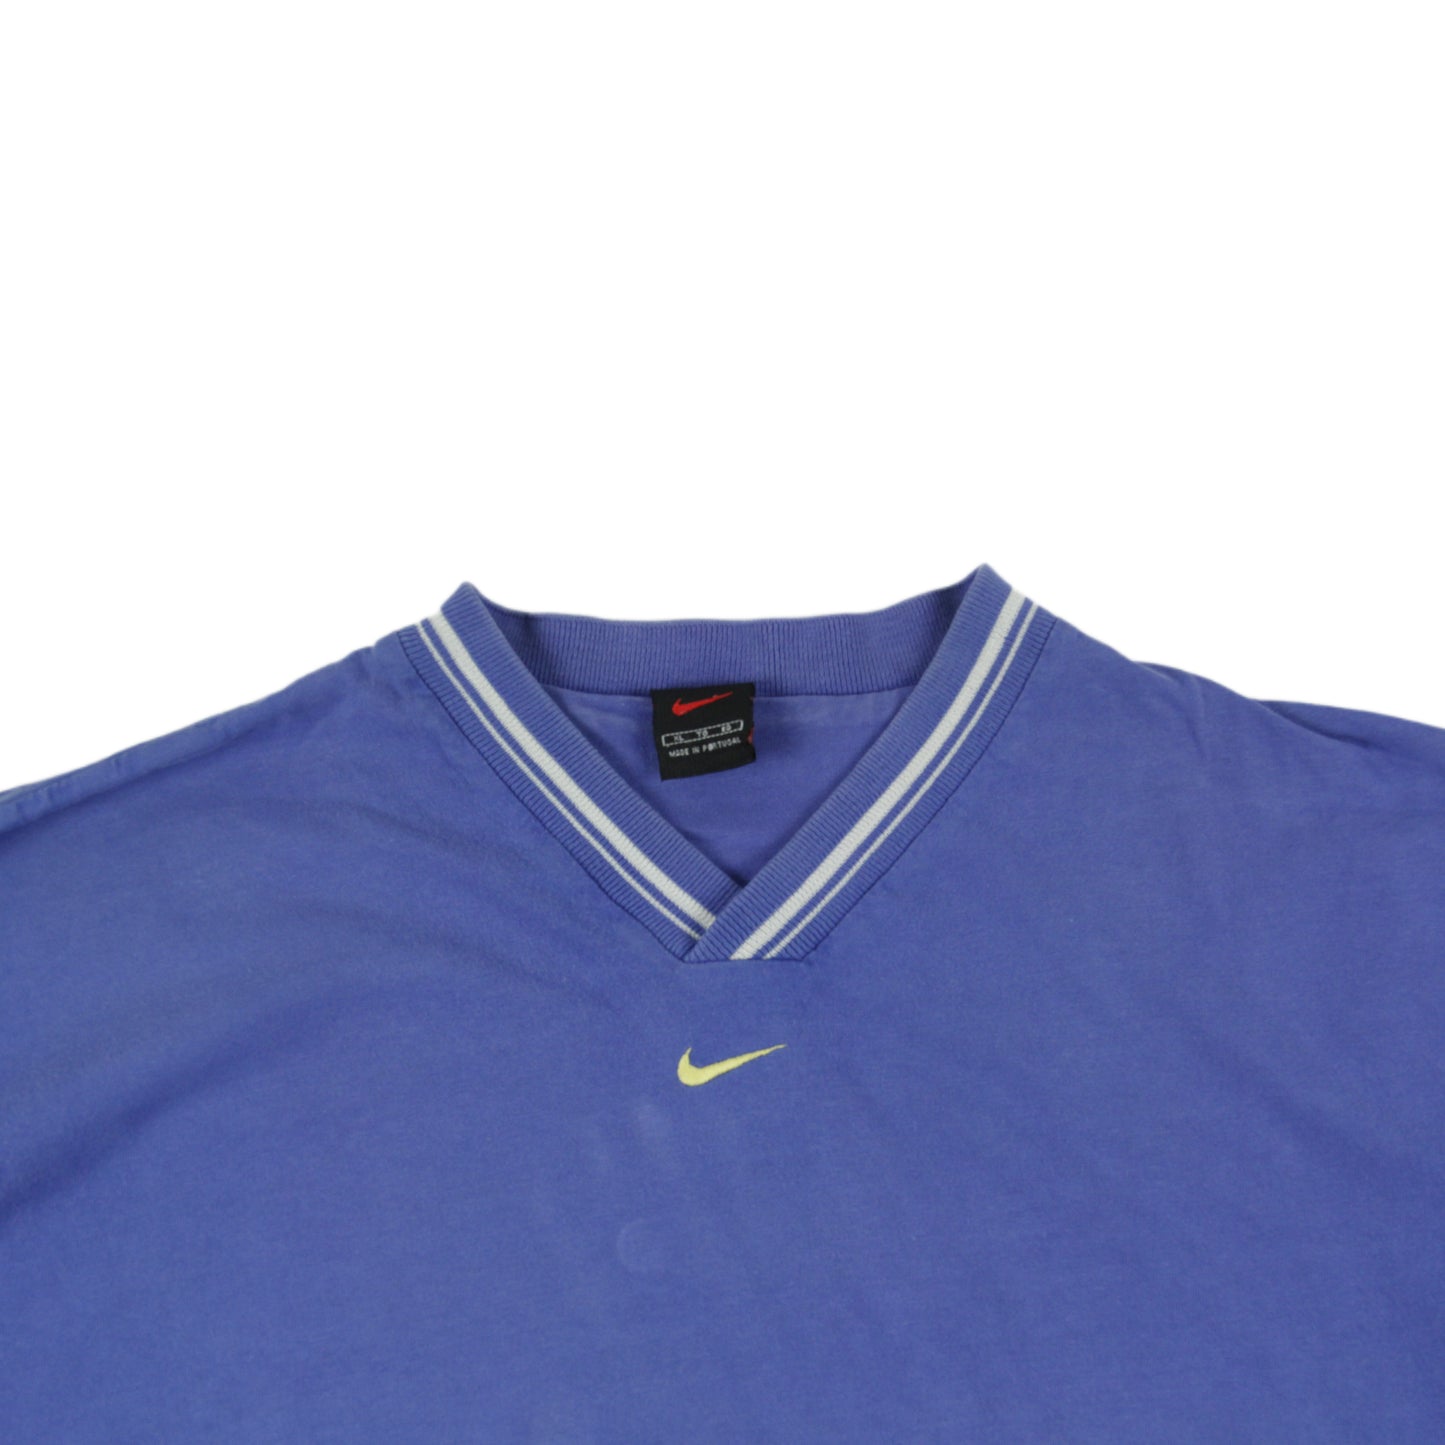 Nike Center Swoosh Shirt Vintage